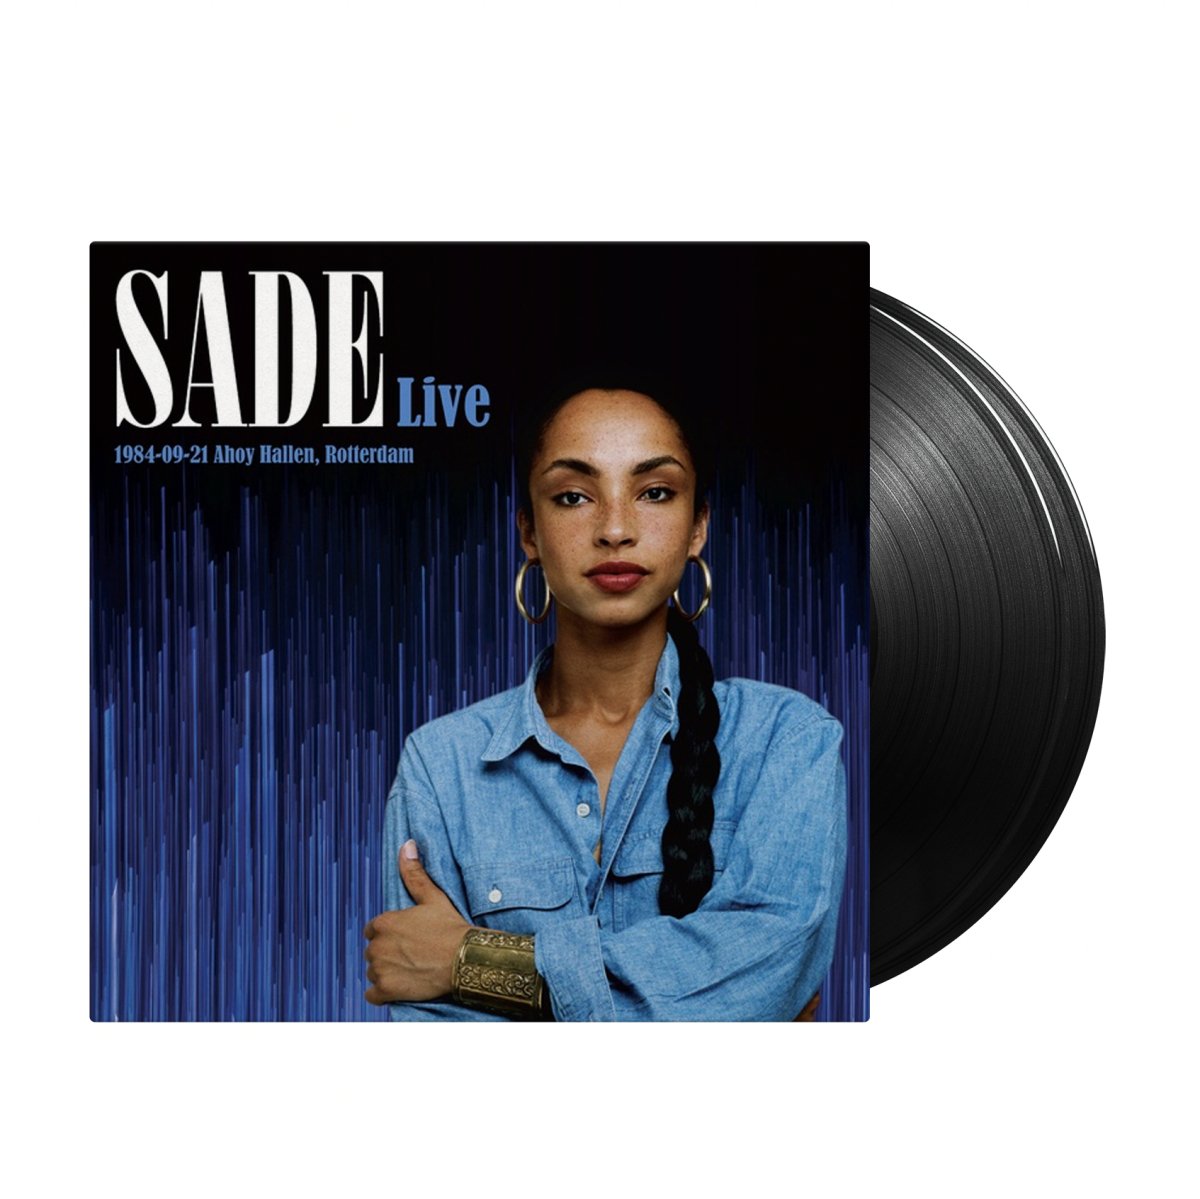 Sade - Live 1984 Ahoy Hallen, Rotterdam - Inner Ocean Records